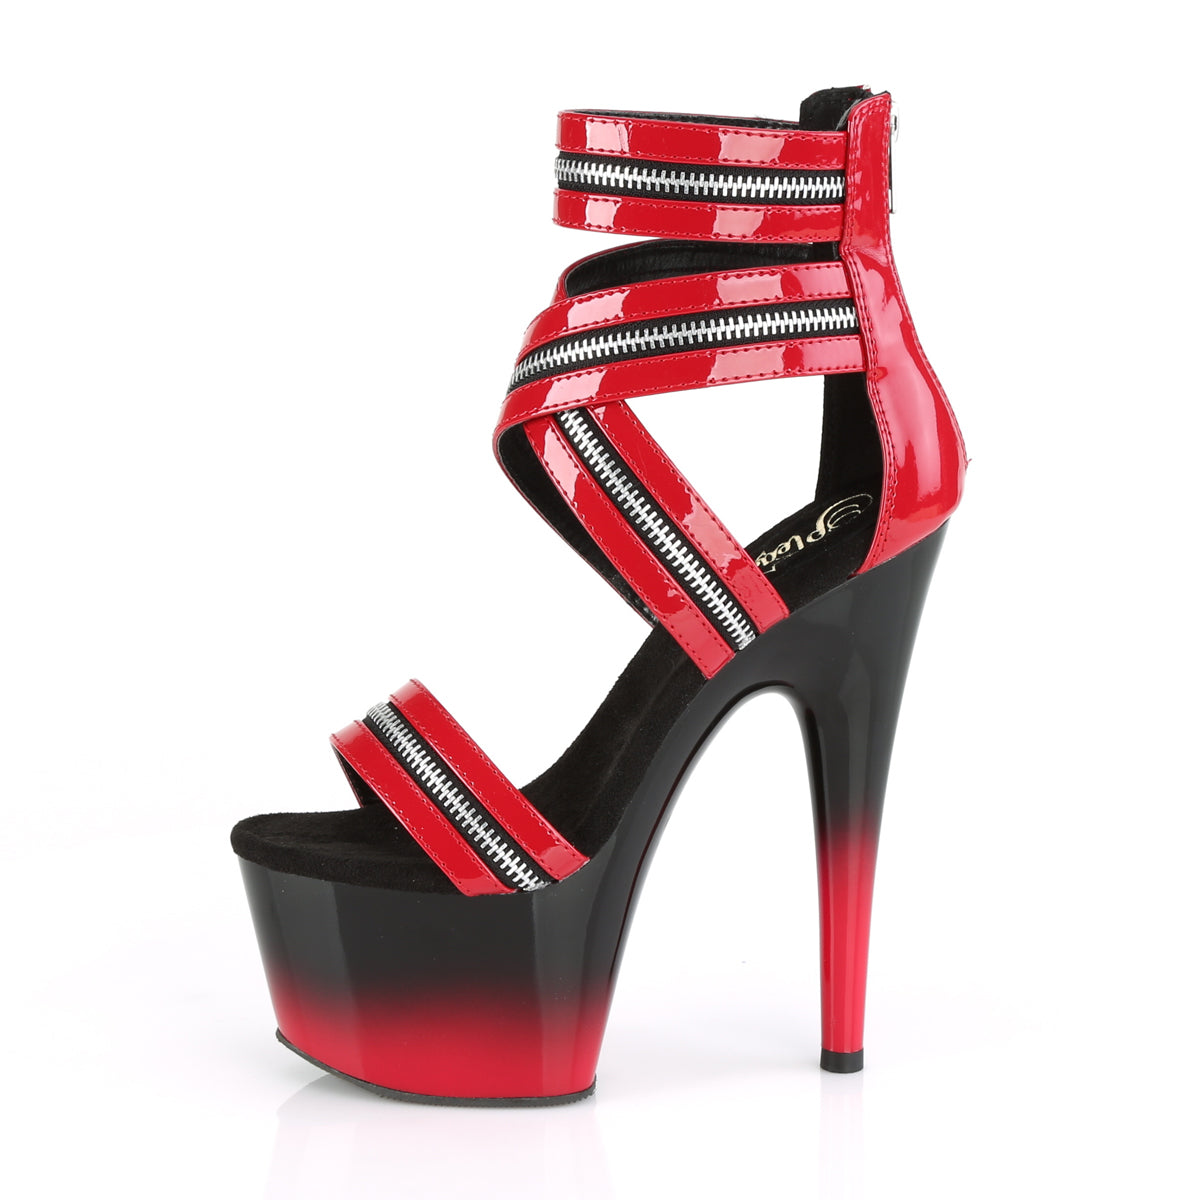 ADORE-766 Red Patent/Black-Red Platform Sandal Pleaser